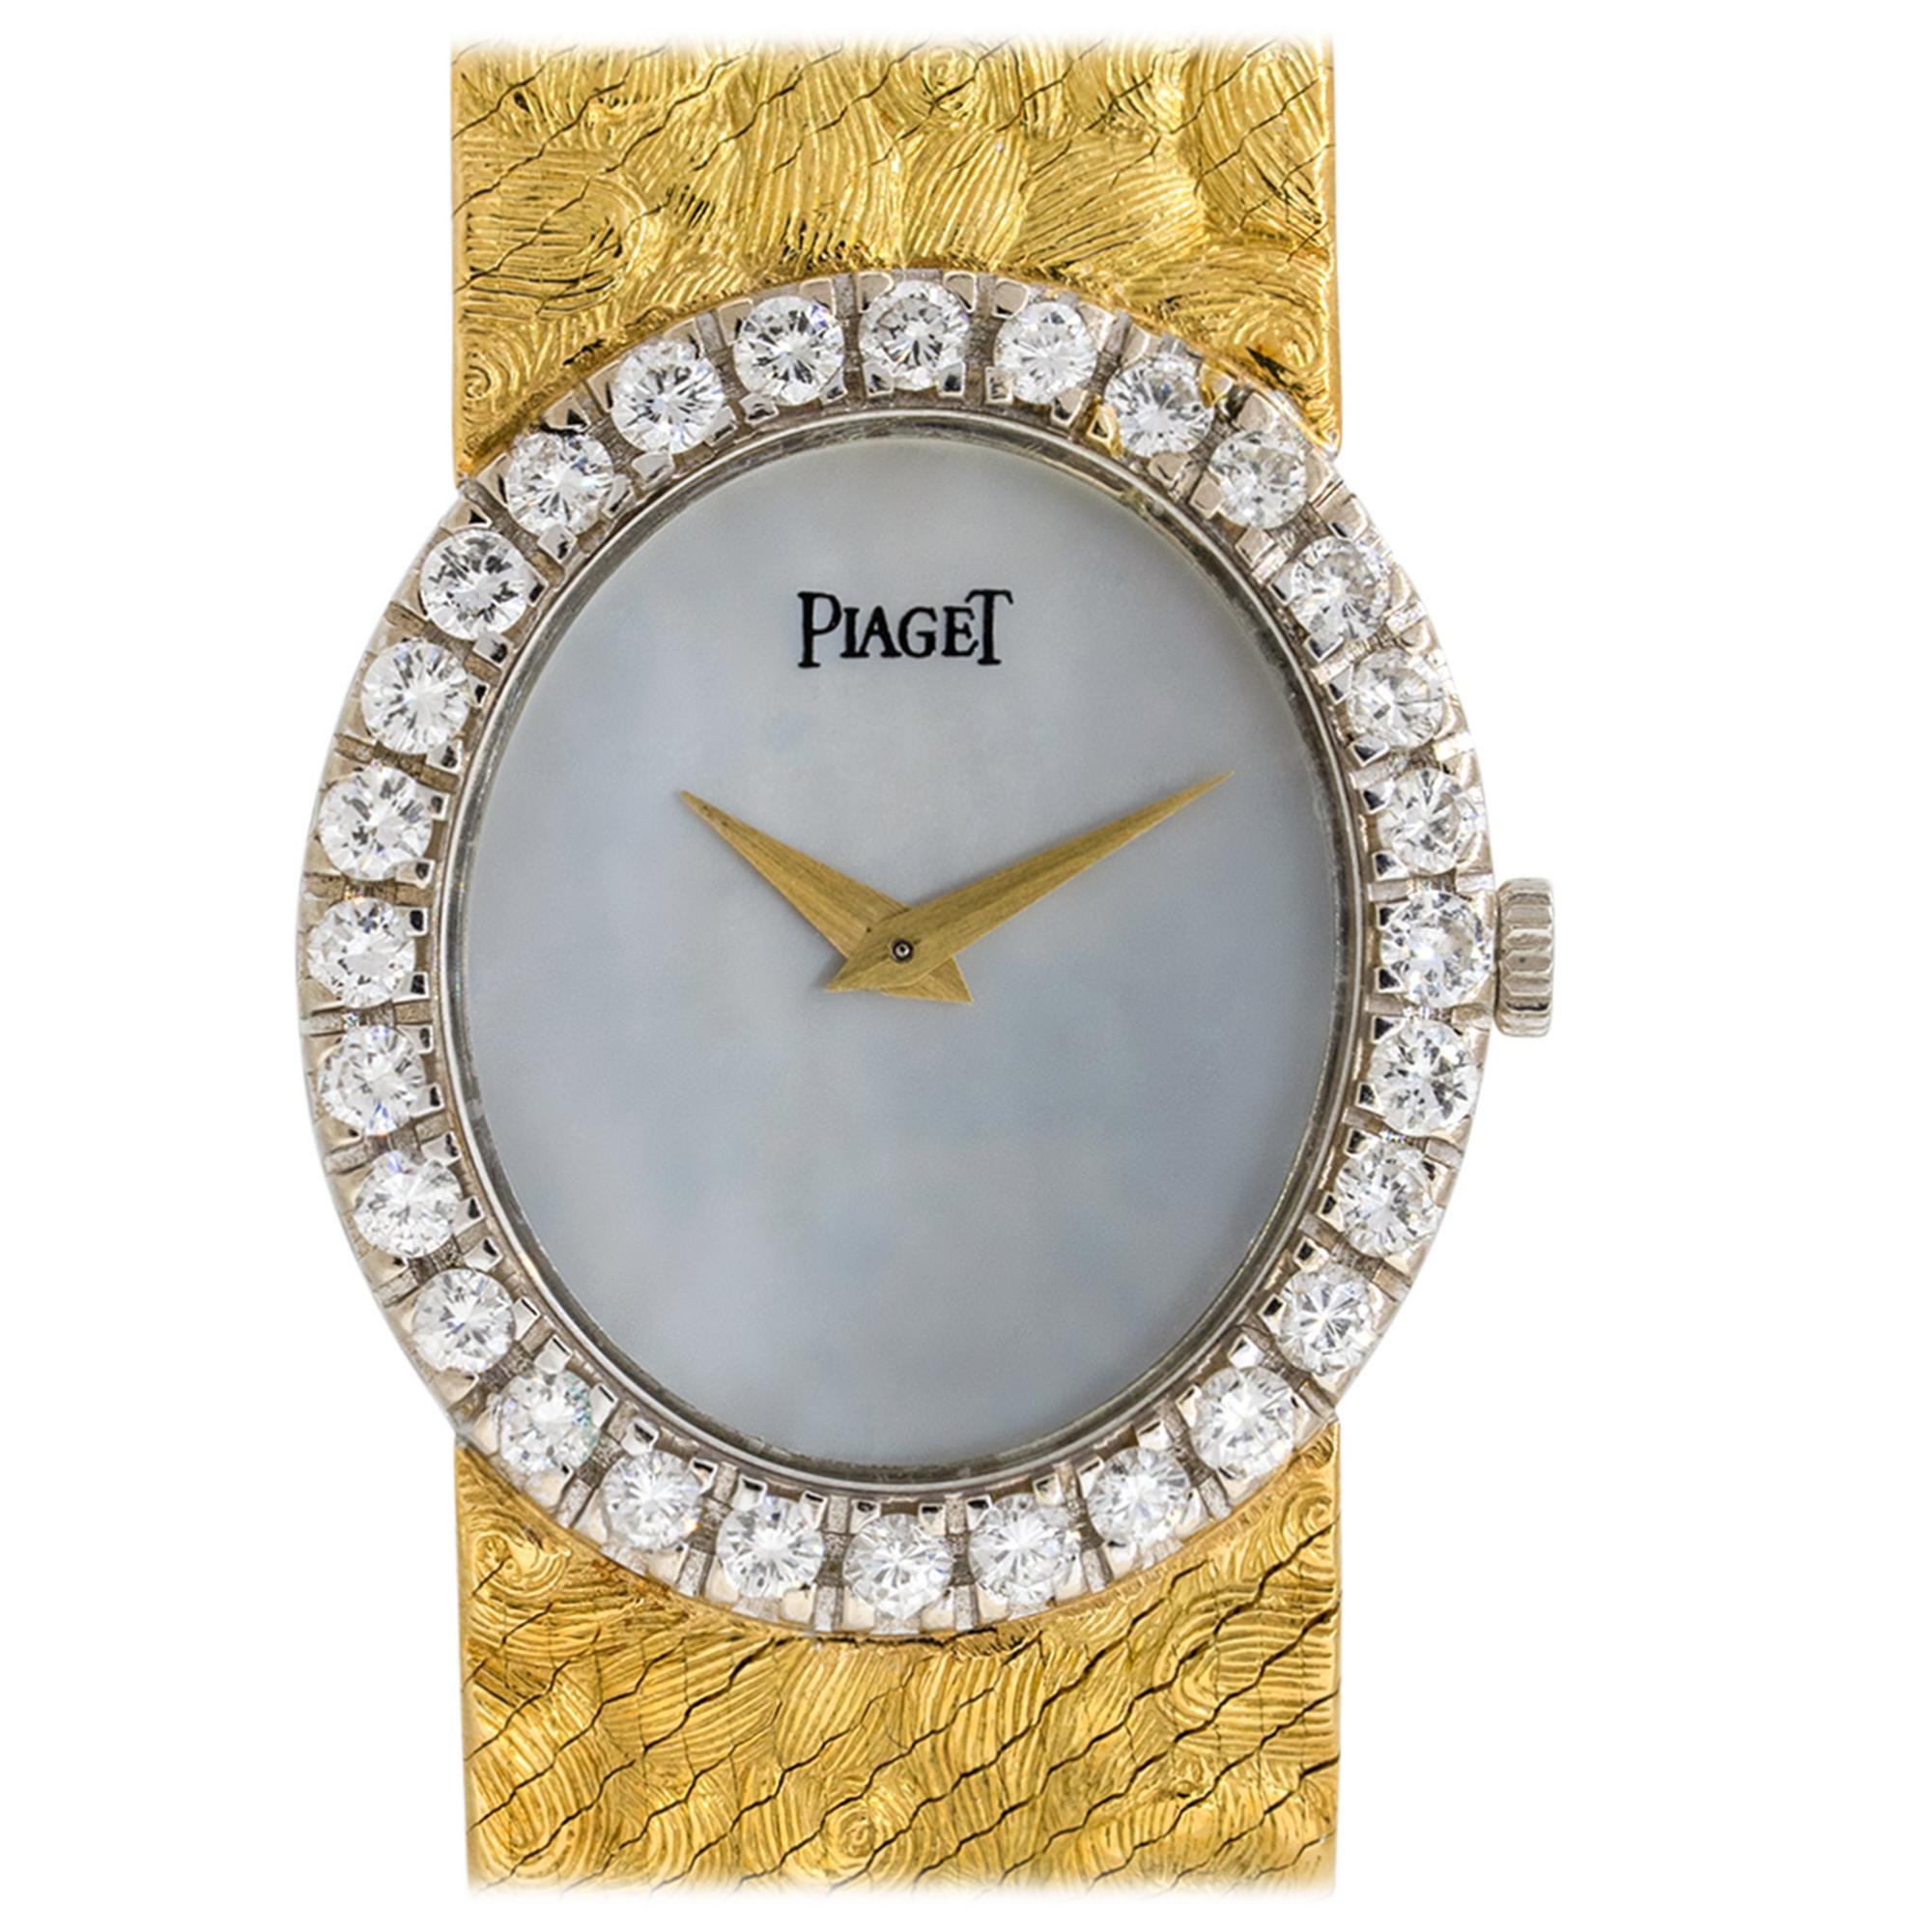 Piaget 9814 Mother of Pearl Dial Diamond Watch 18 Karat in Stock